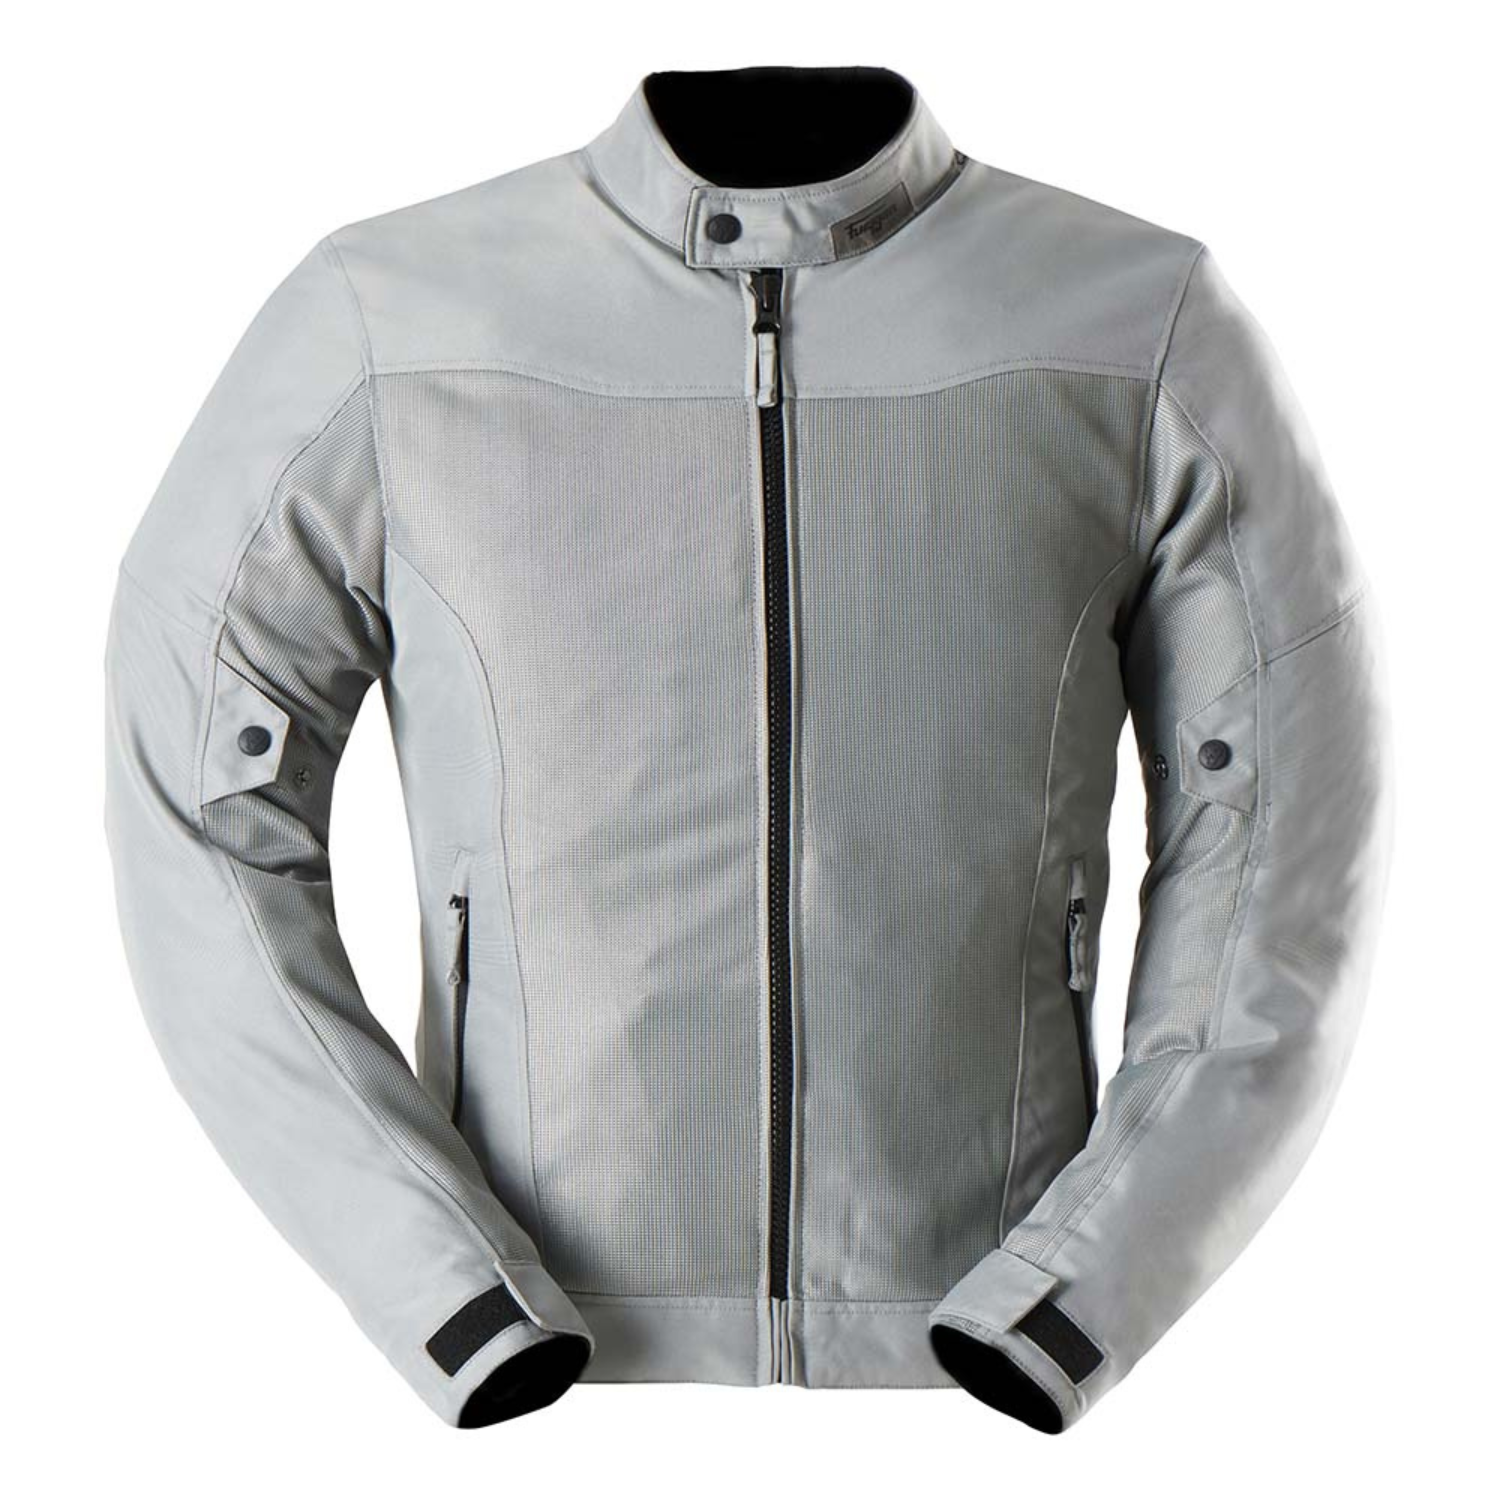 Image of Furygan Mistral Evo 3 Jacket Grey Size 3XL ID 3435980362706